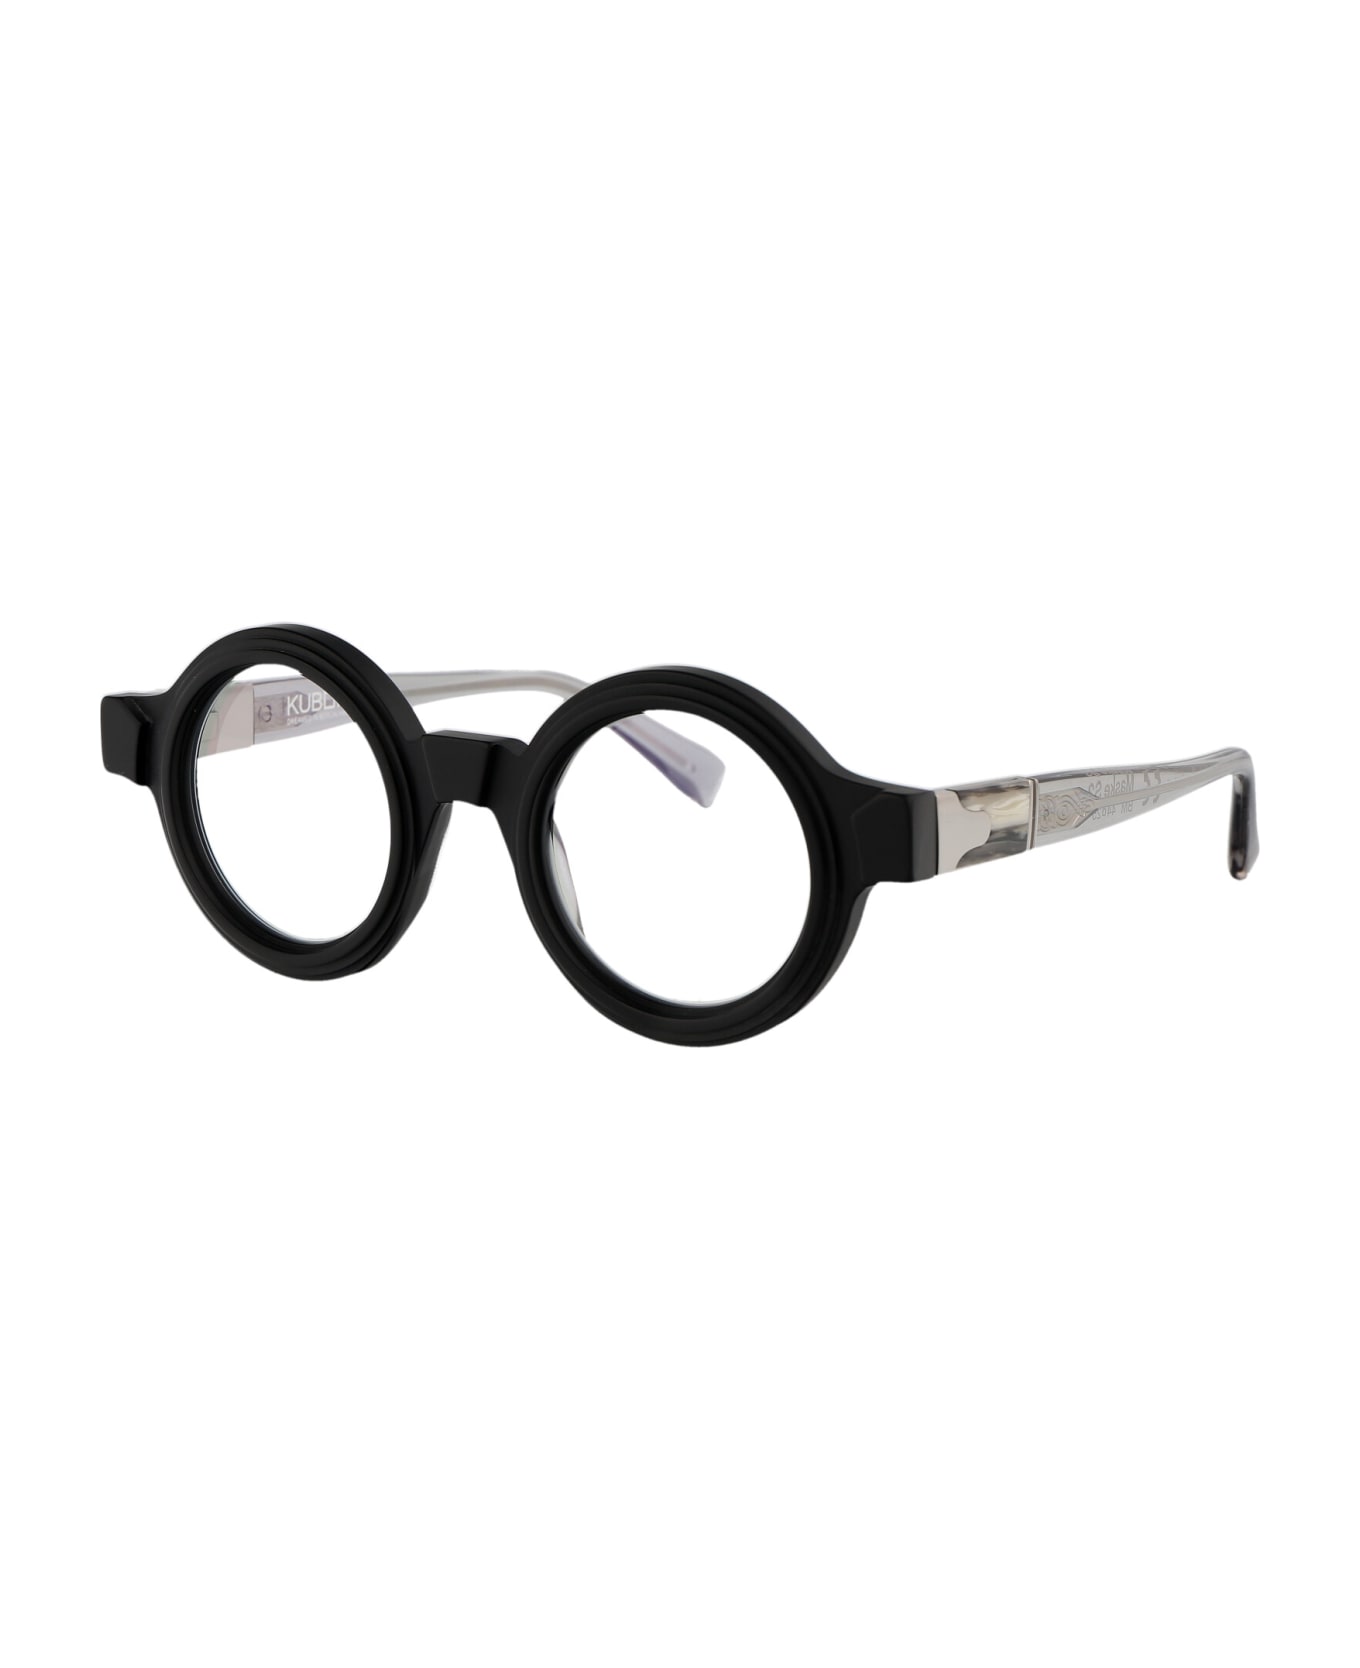 Kuboraum Maske S2 Glasses - BM black